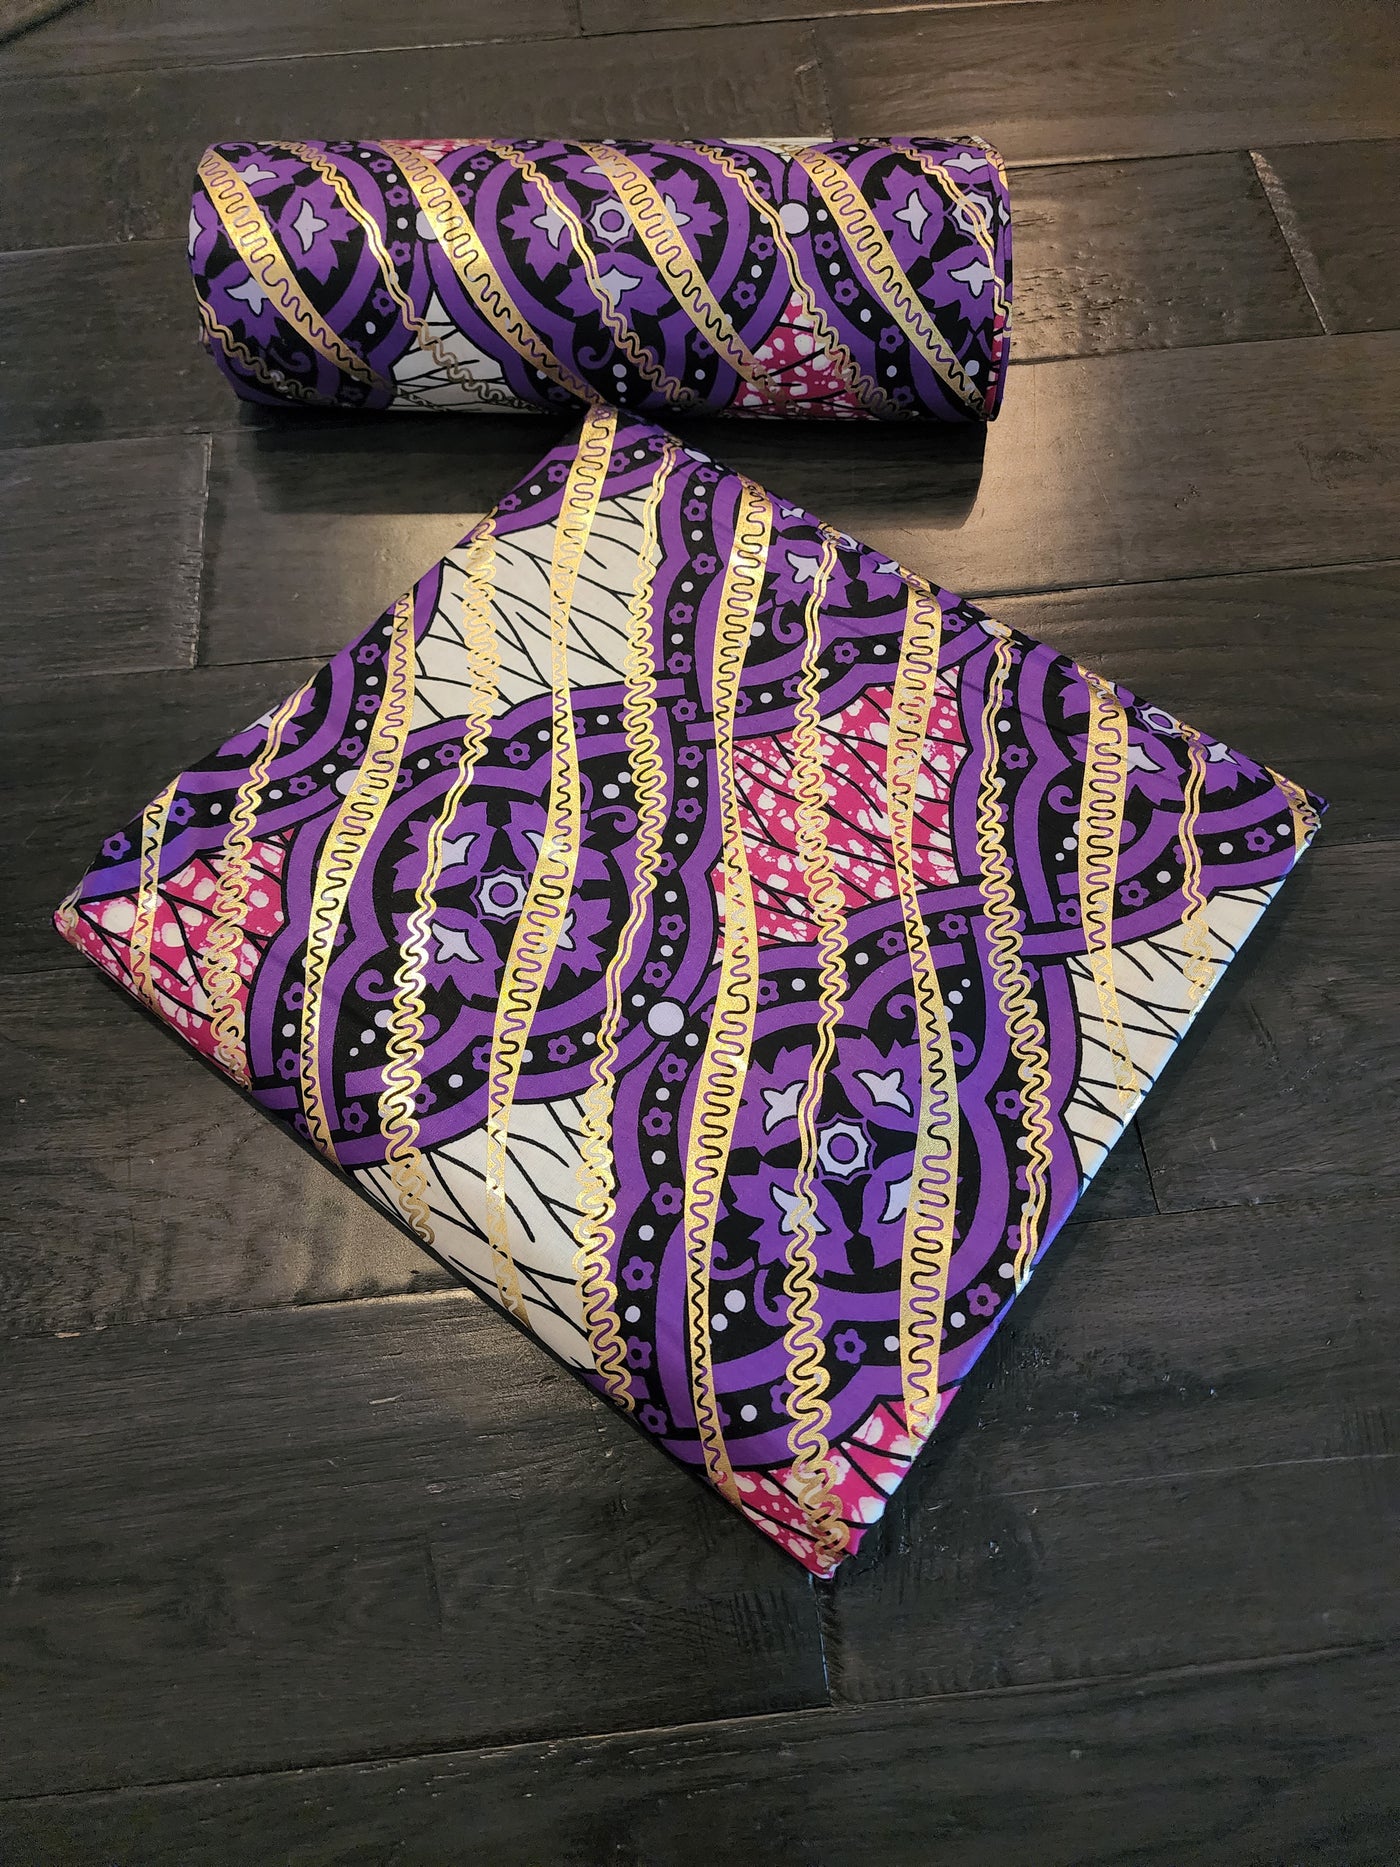 Purple Java Gold Ankara Fabric, ACS0399